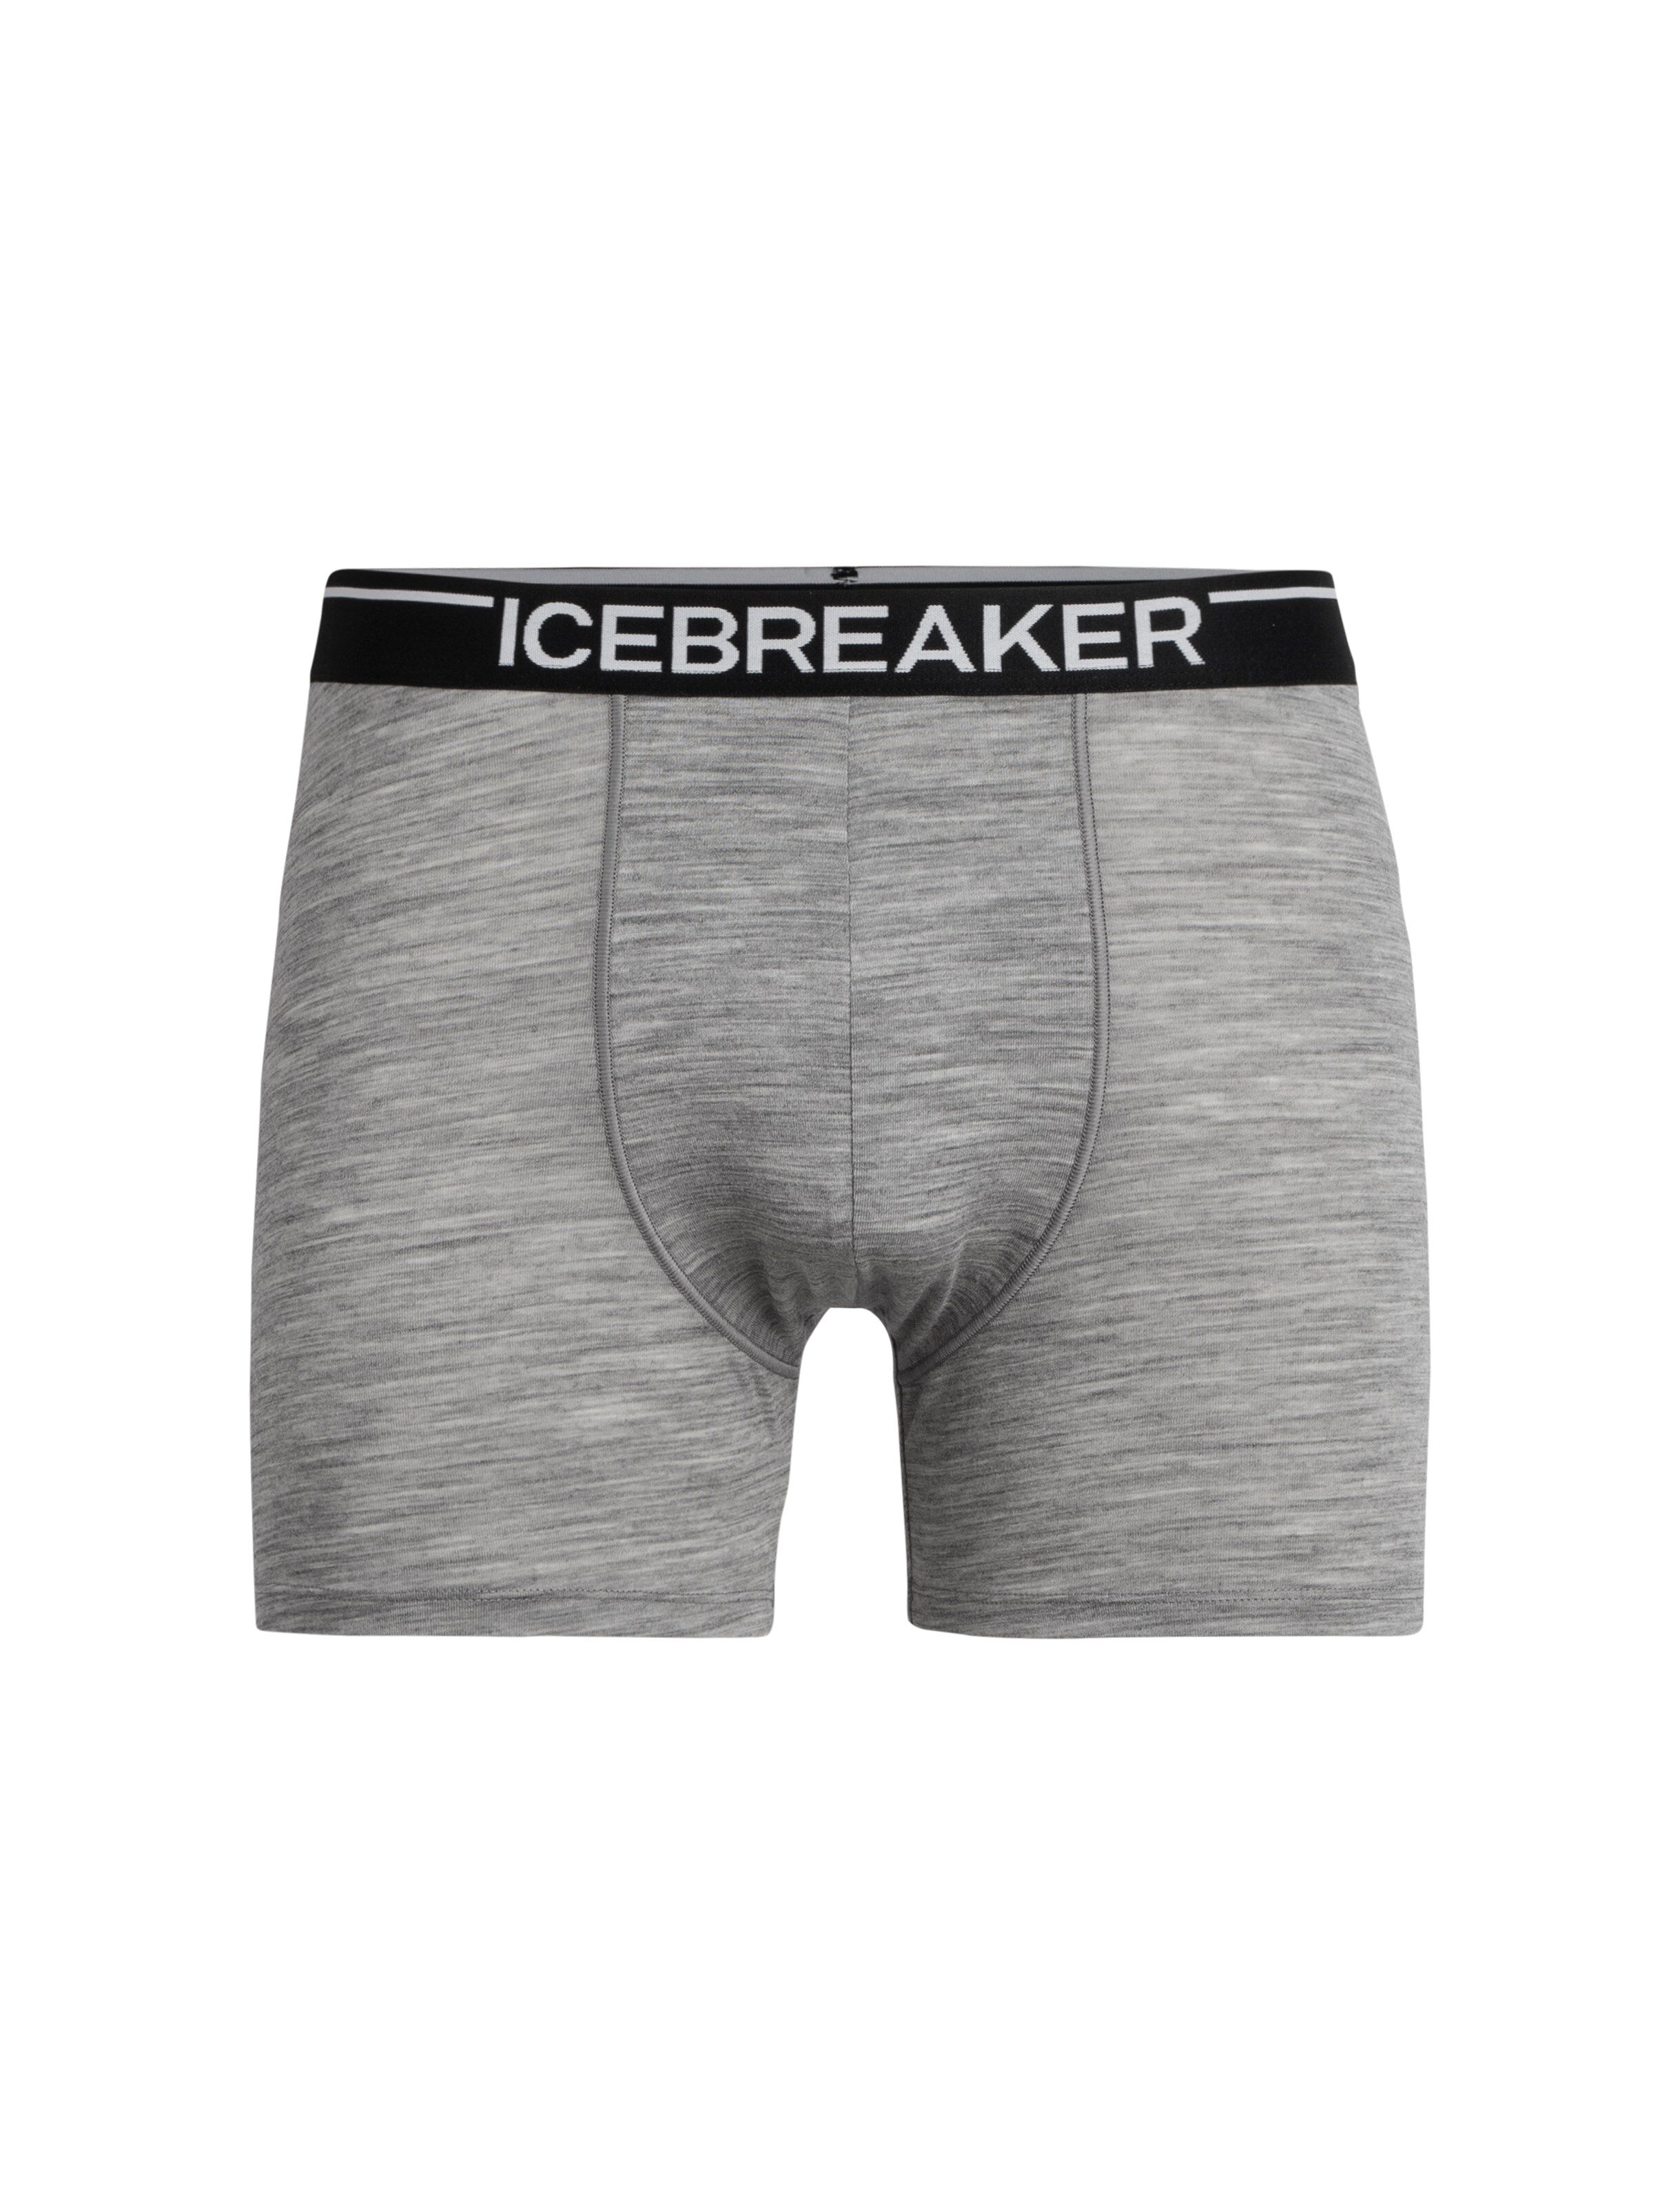 Icebreaker Anatomica Boxers, boxershorts herre Metro HTHR 1030290161 L 2020